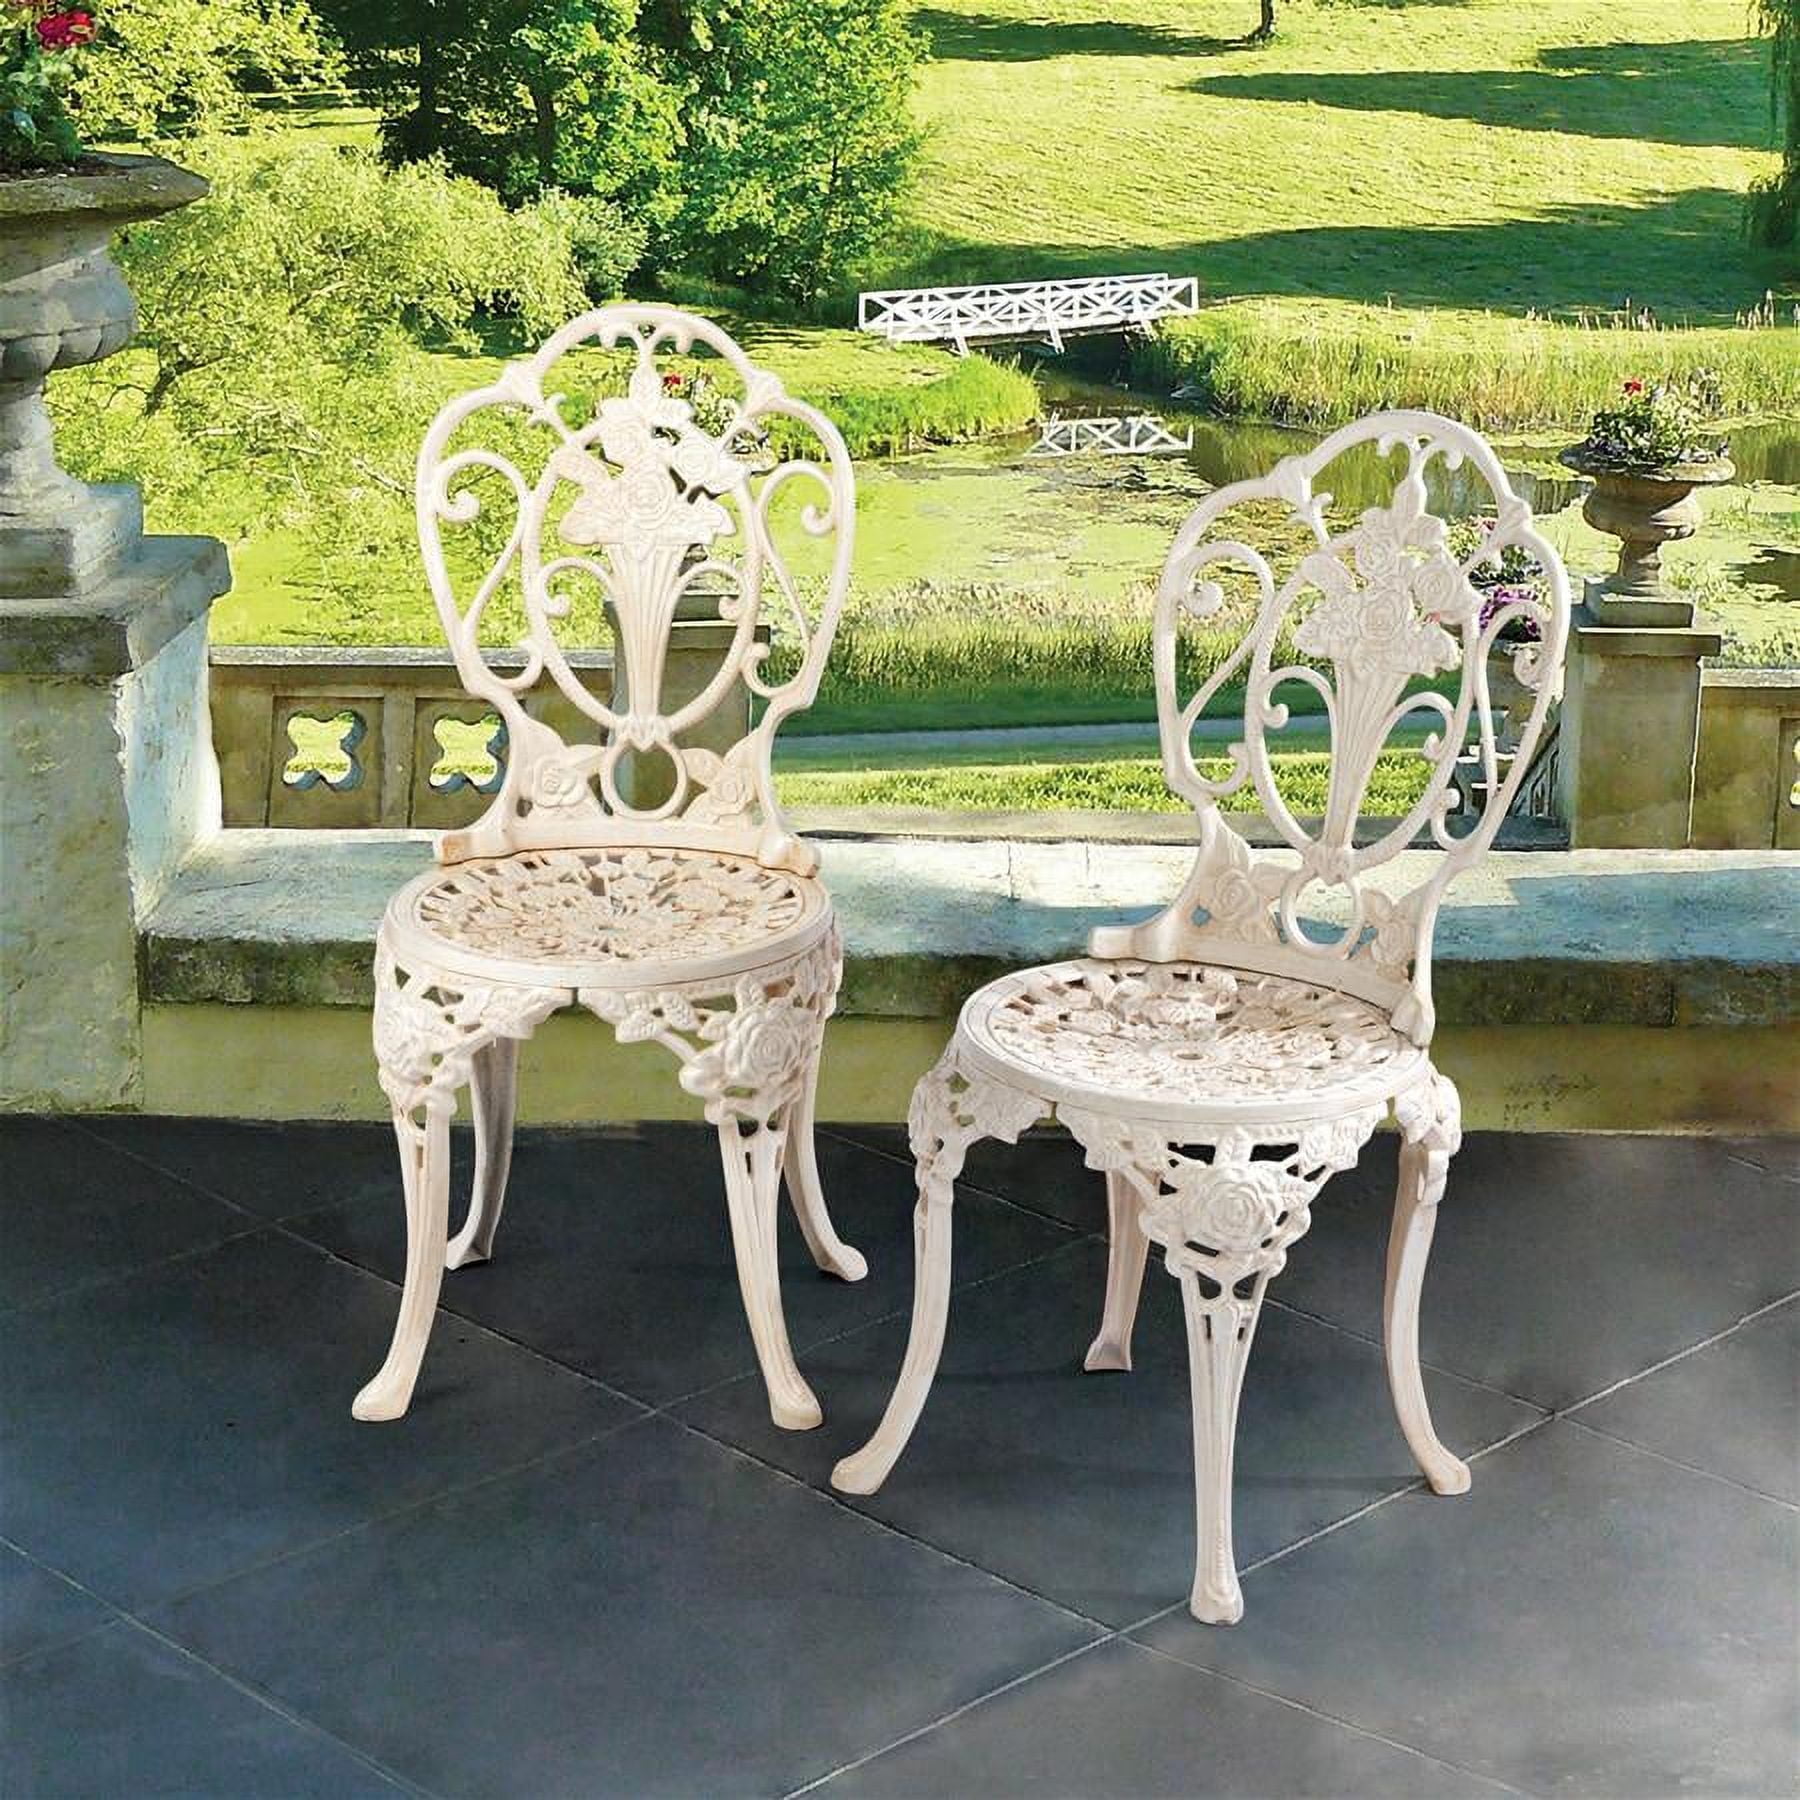 Design Toscano Villa Ravello Rose Garden Cast Iron Bistro Chair: Set of Two - image 1 of 3